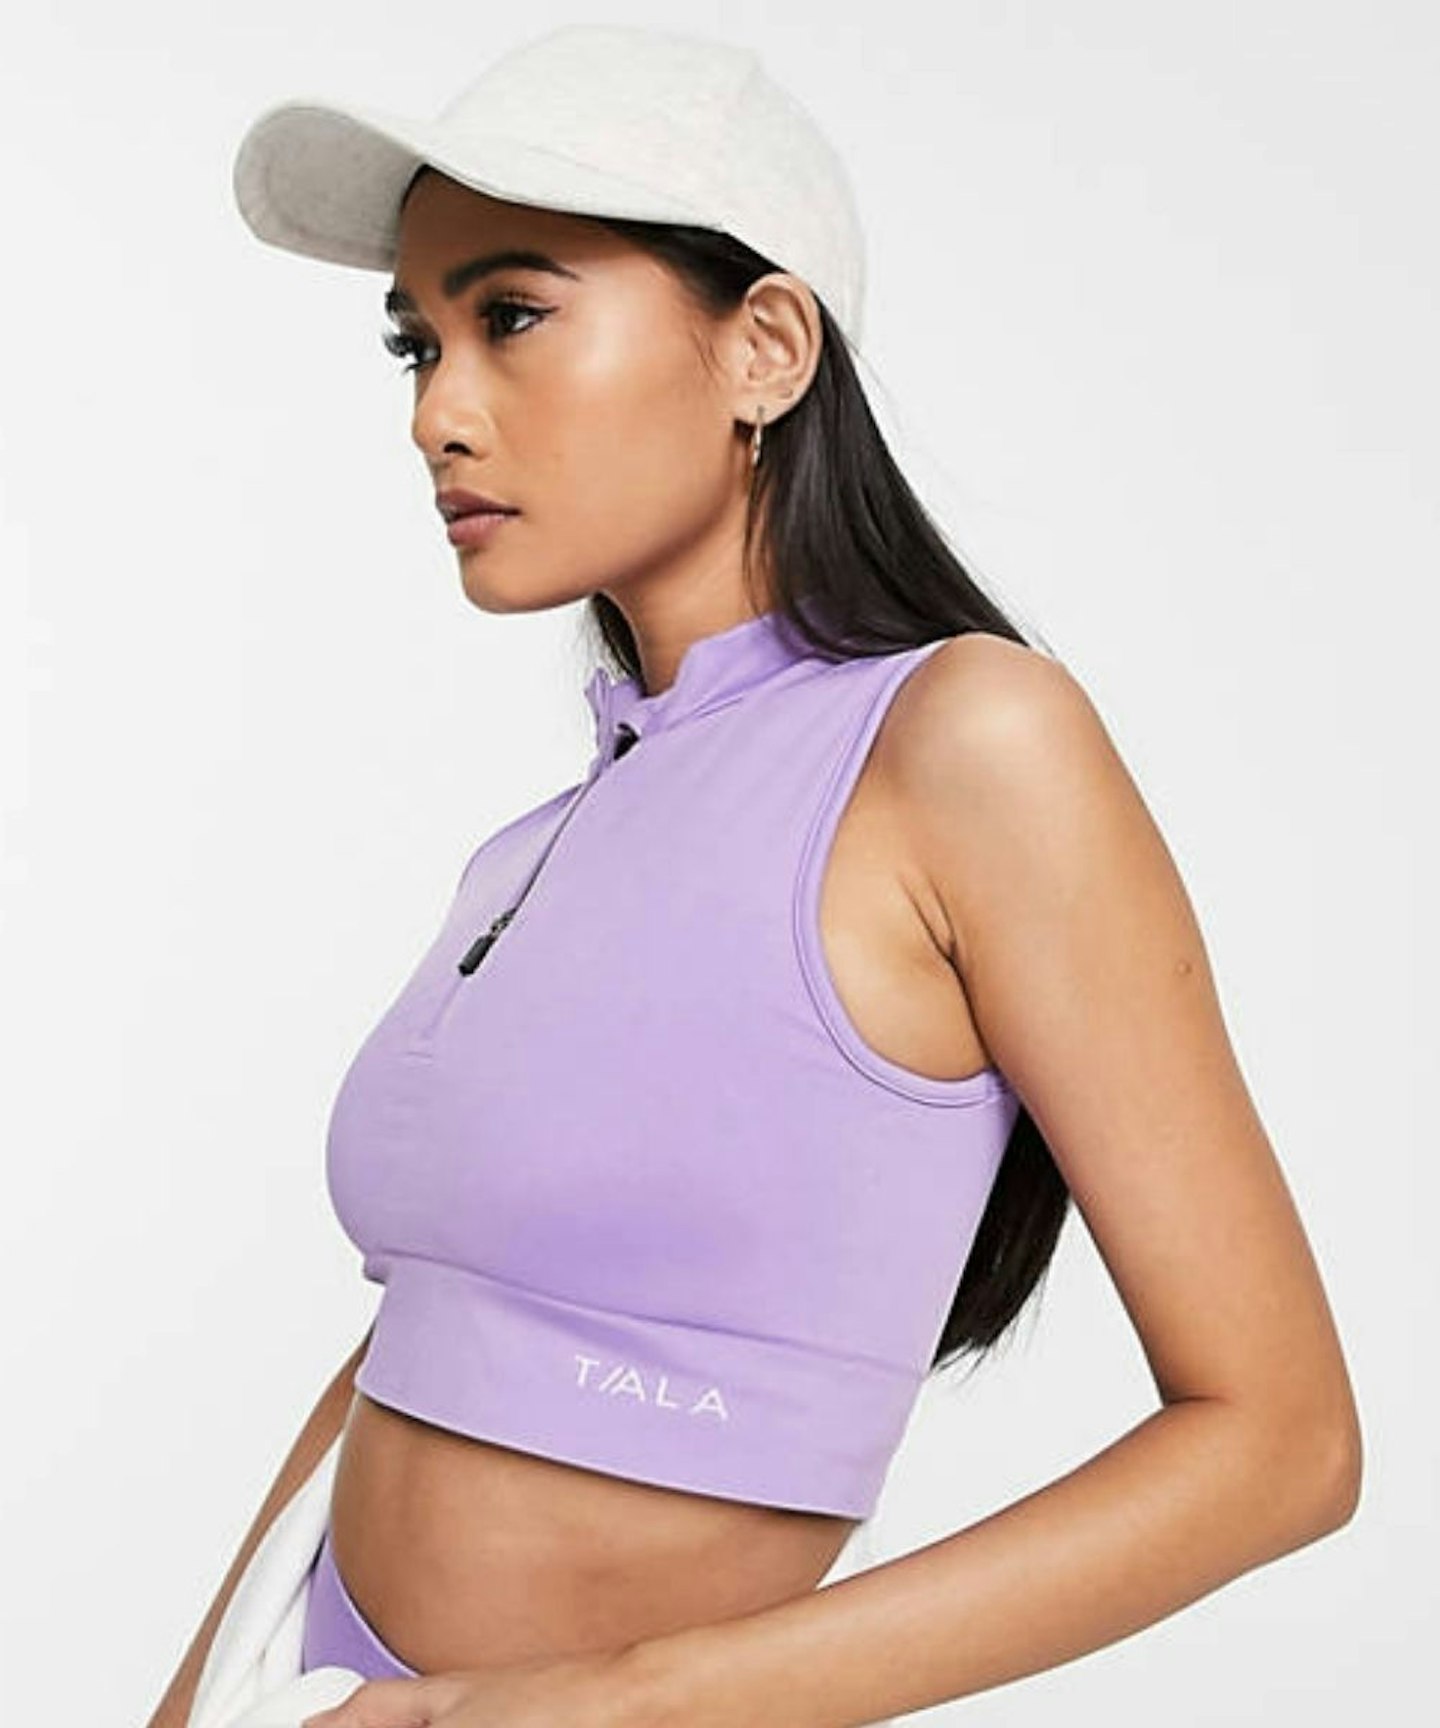 TALA Zahara medium support zip up sports bra in purple exclusive to ASOS